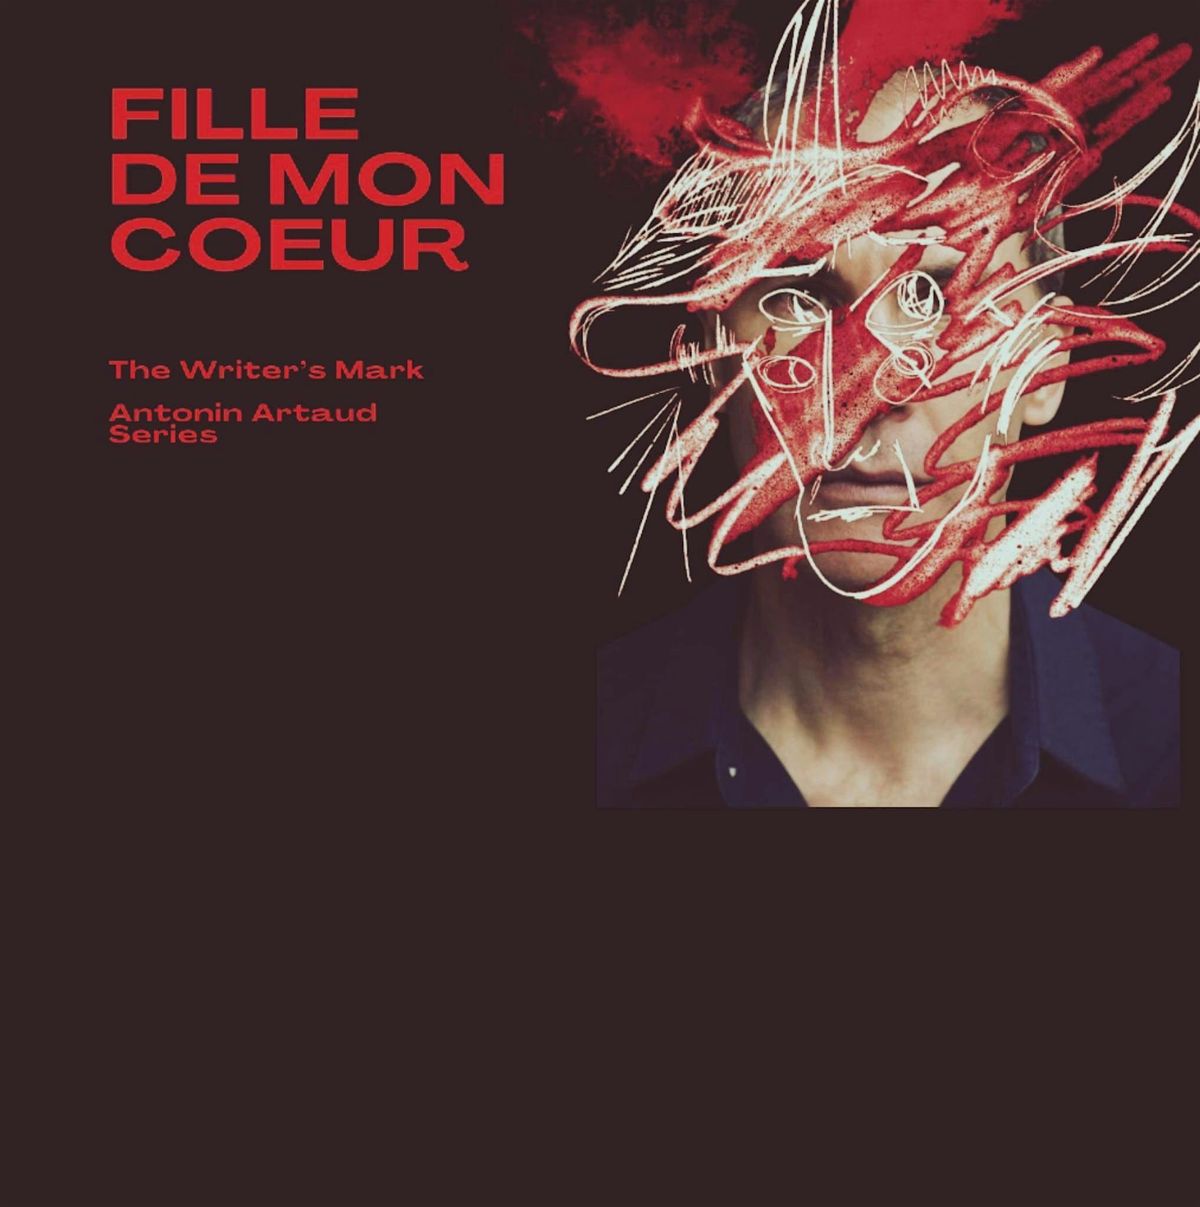 FILLE DE MON COEUR (Daughter of my Heart) - The Writer\u2019s Mark